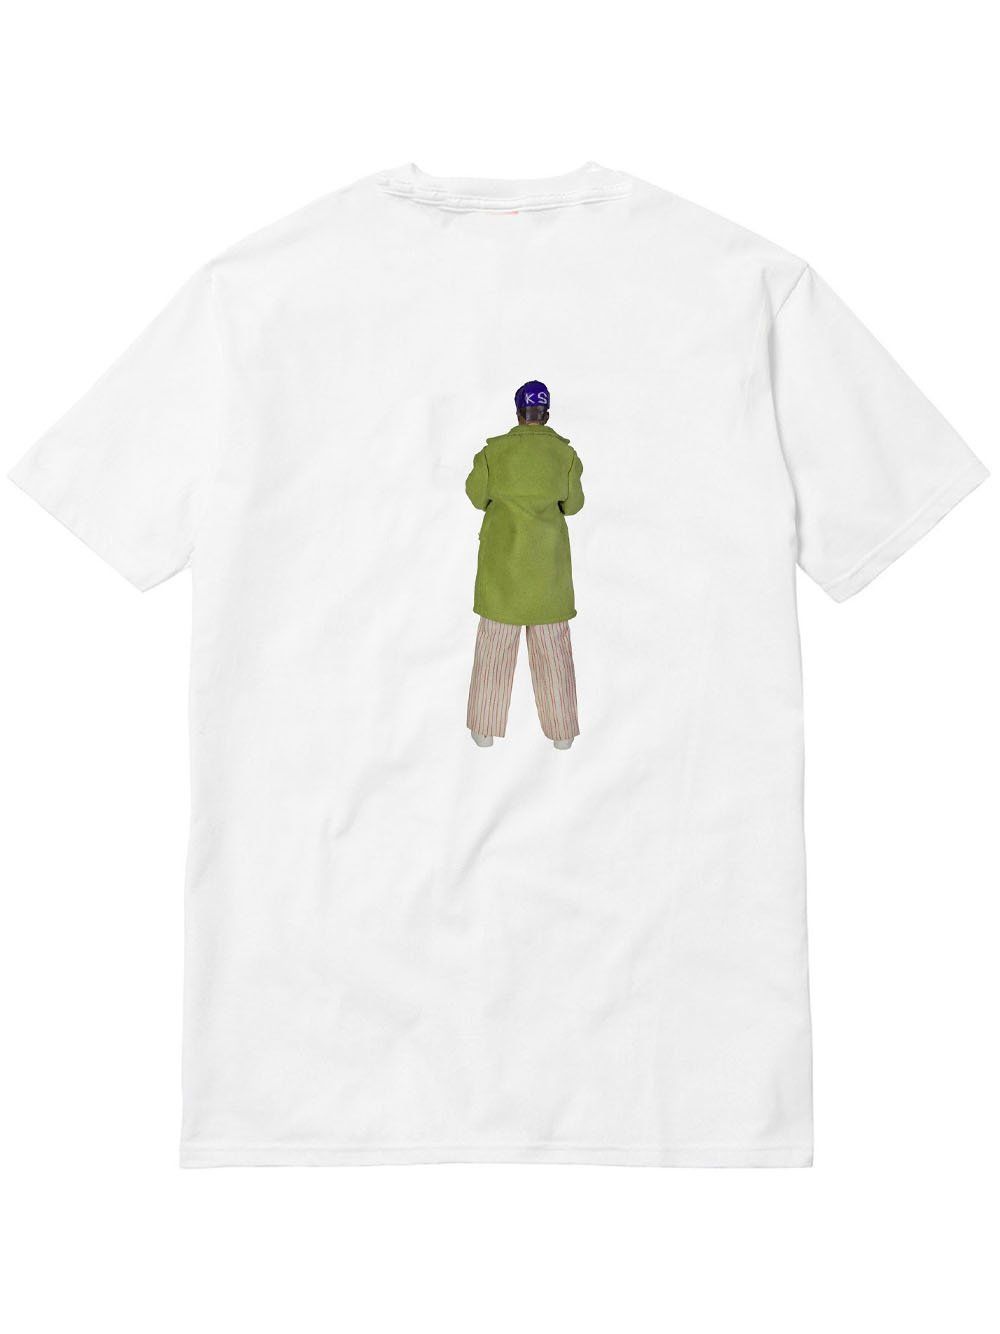 KID SUPER Jay Z T-Shirt - MAISONDEFASHION.COM